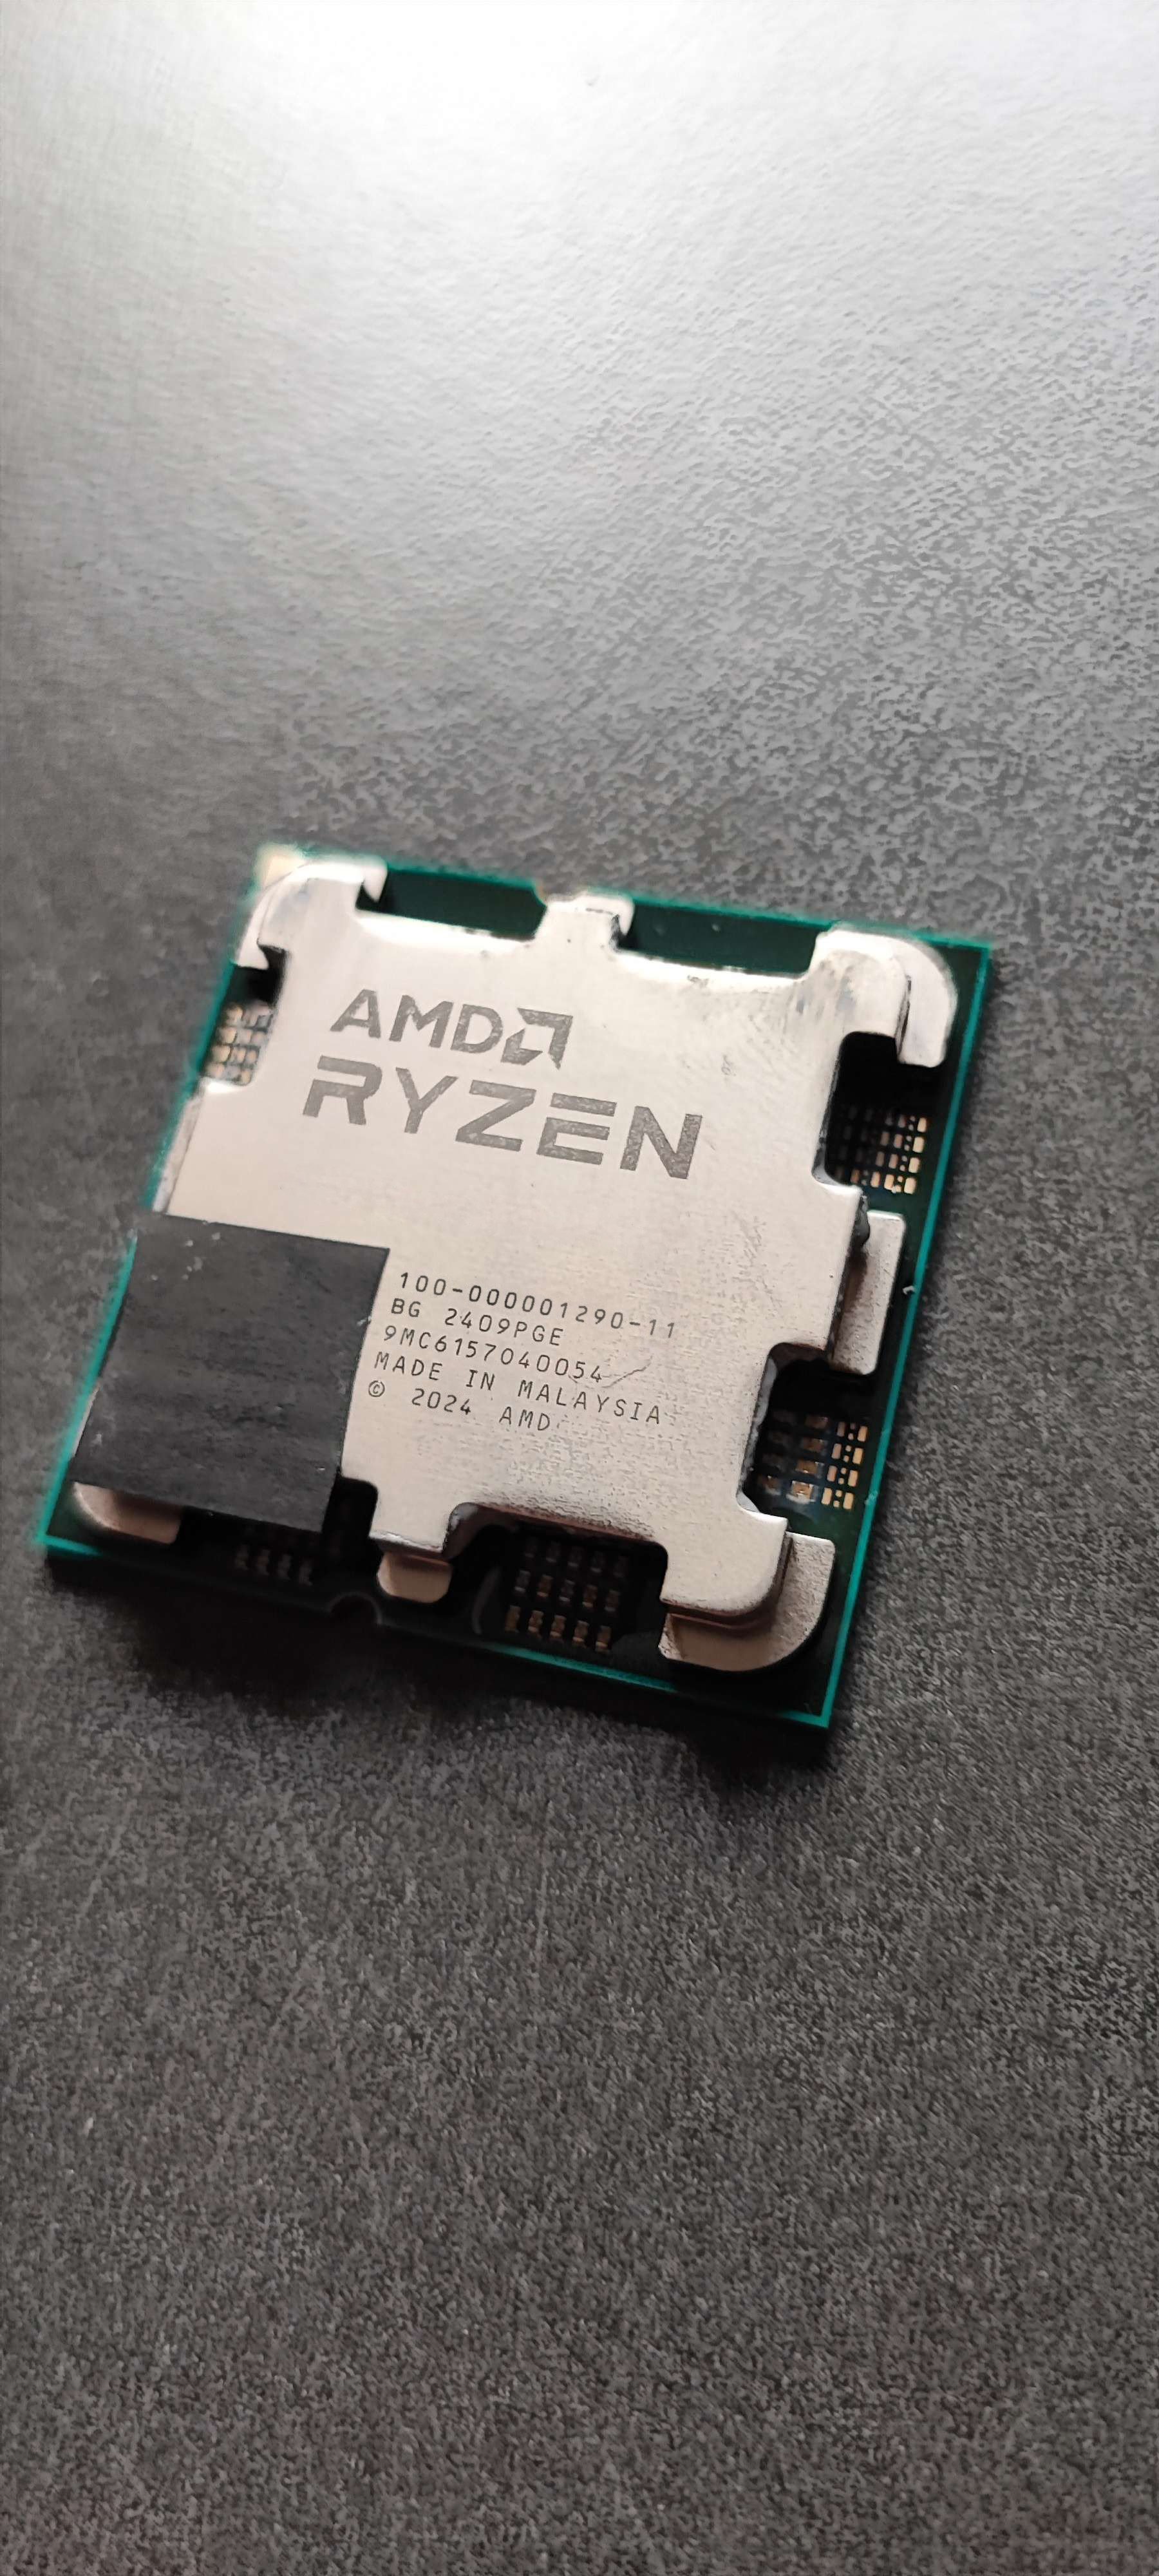 gkk0r1awmaatjnq หลุดภาพซีพียู AMD Ryzen 9000 “Granite Ridge” สถาปัตย์ ZEN5 รุ่น ES ตัวทดสอบ 